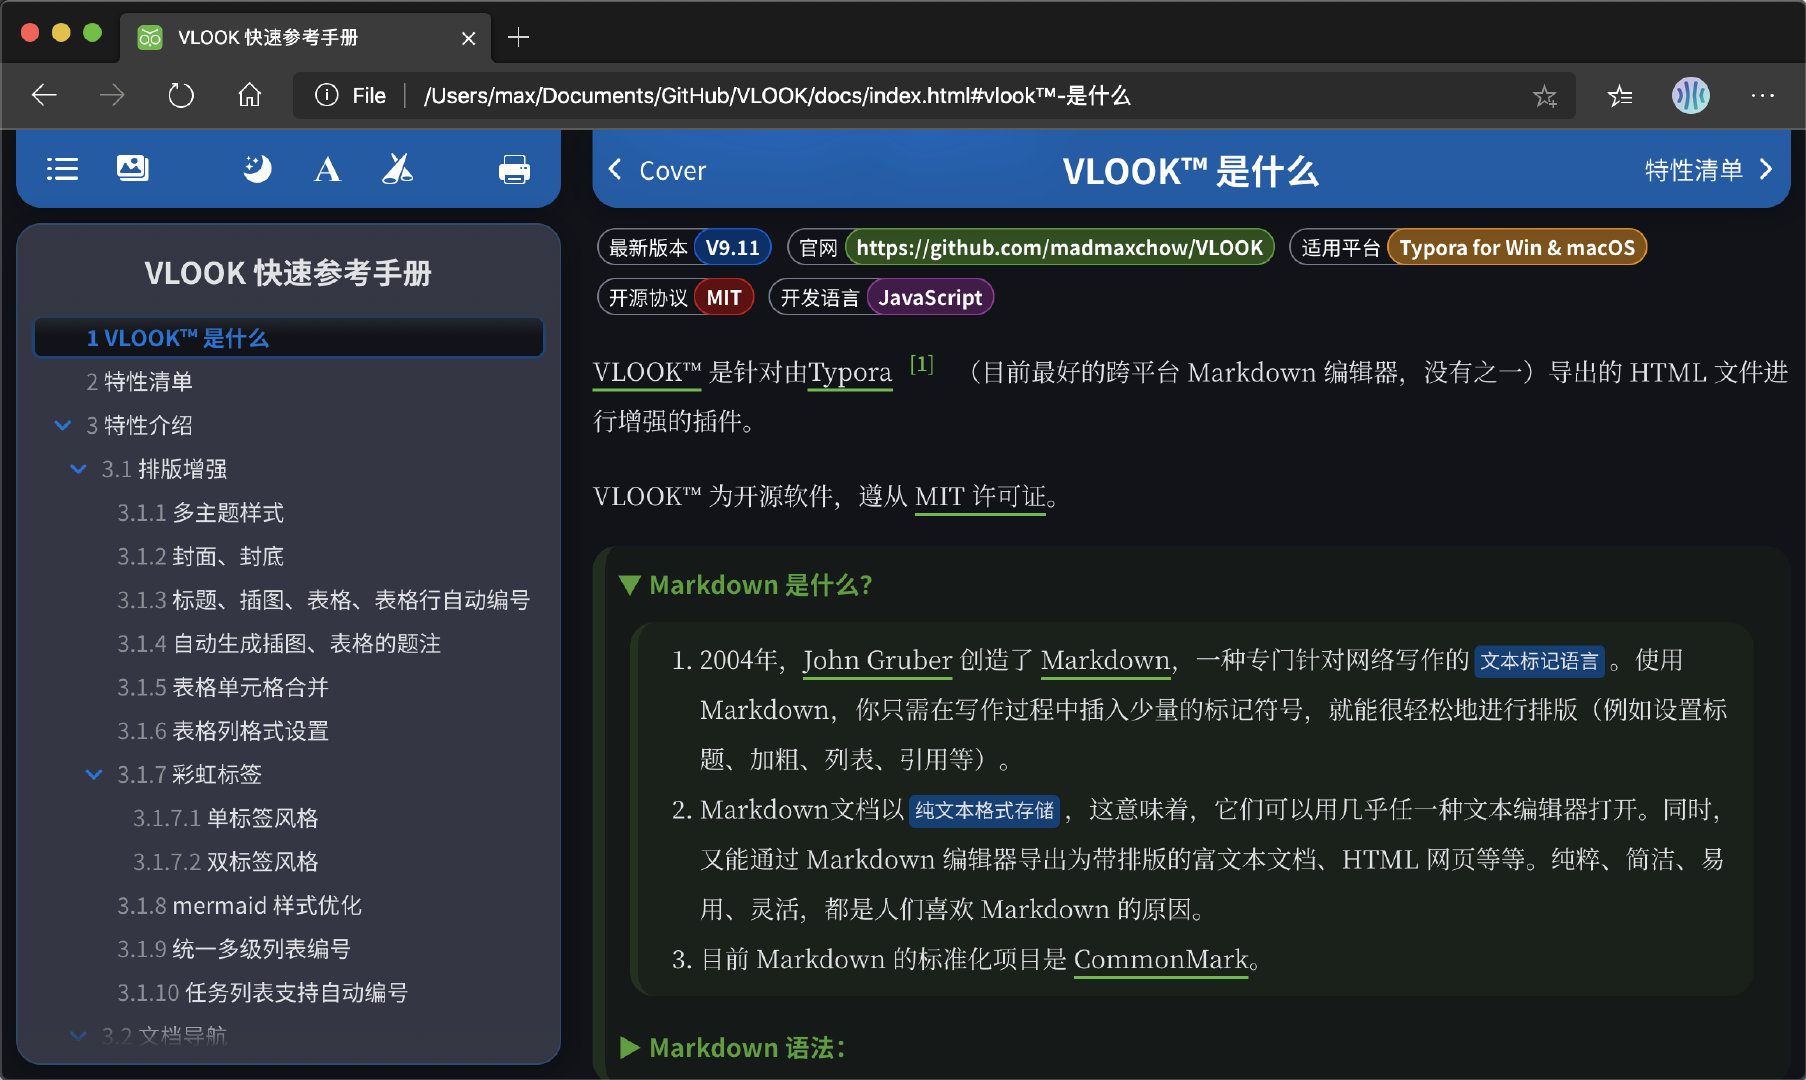 VLOOK 已更新至 V9.11：为 Markdown 带来了代码块增强、主题Logo及文档交互及样式优化